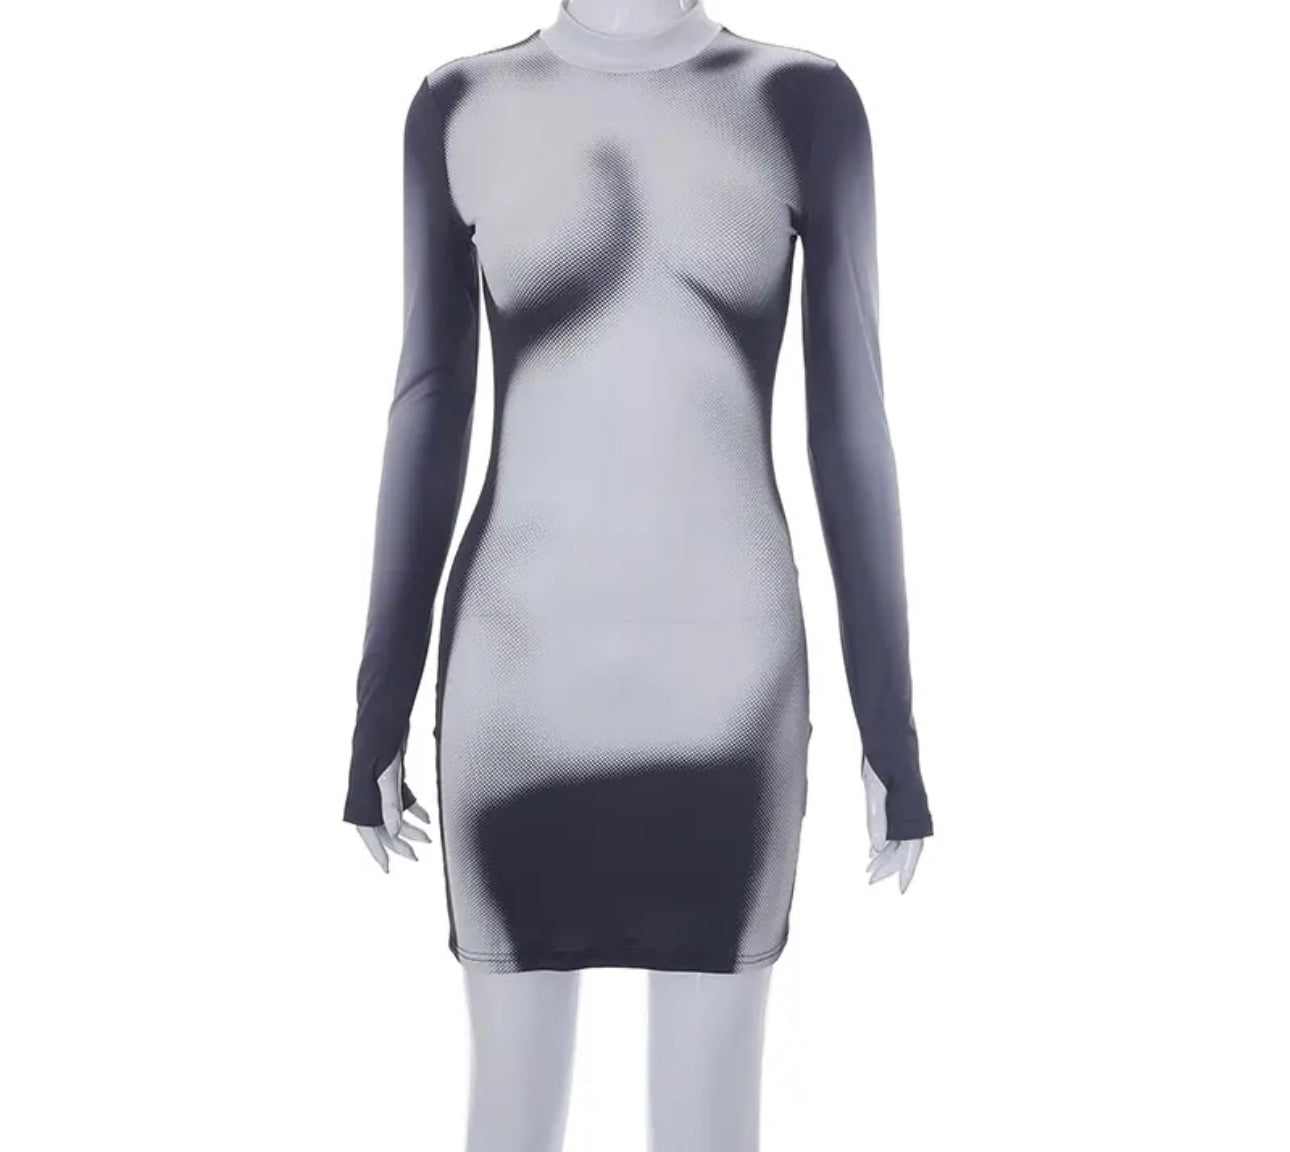 Body Print Dress